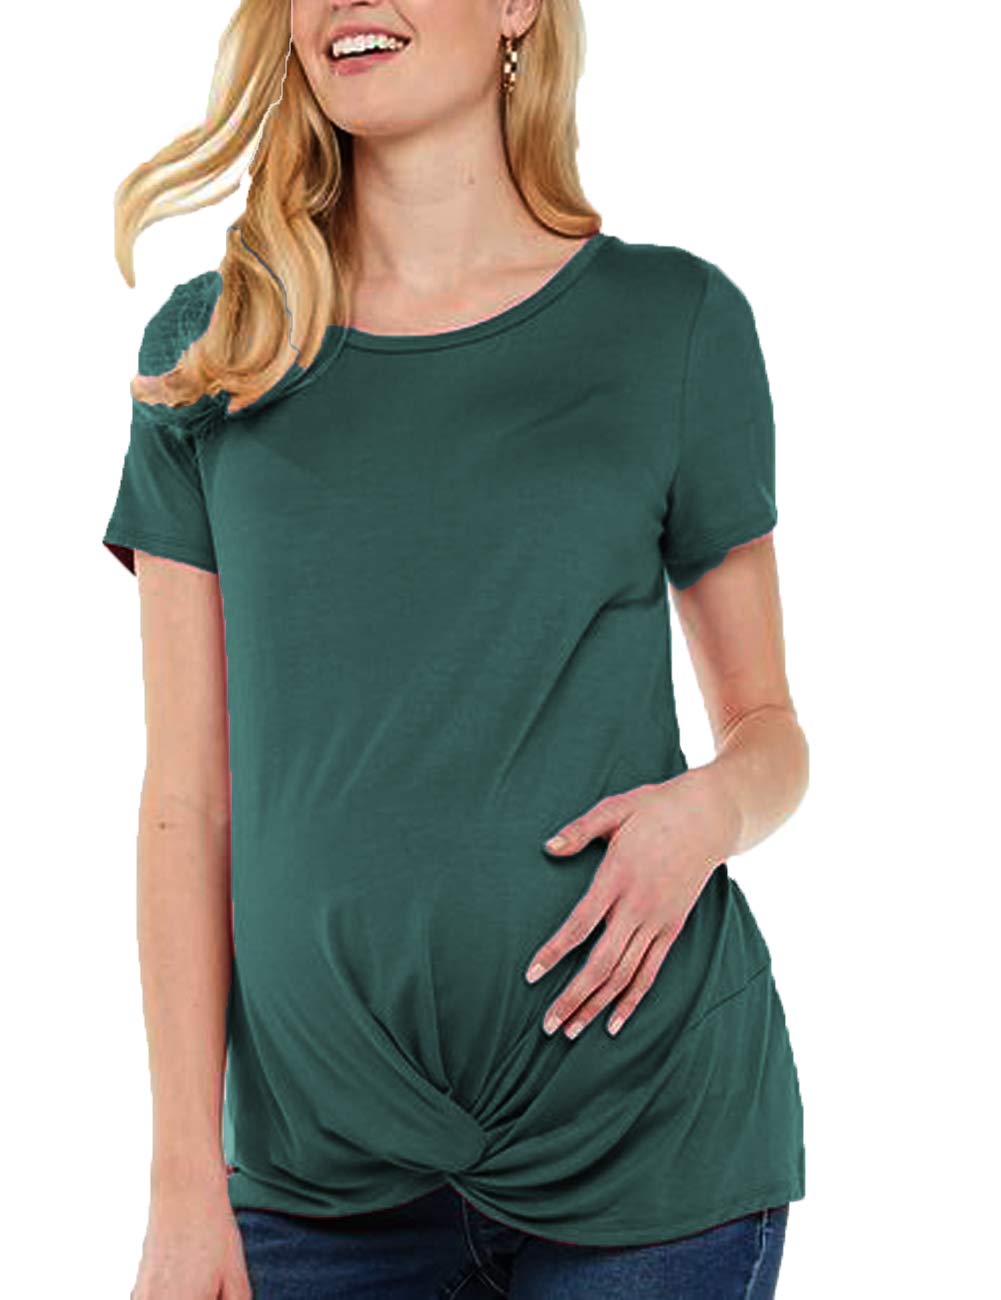 Maternity Shirt Women's Casual Short Sleeve Twist Knot Tunics Tops Blouses